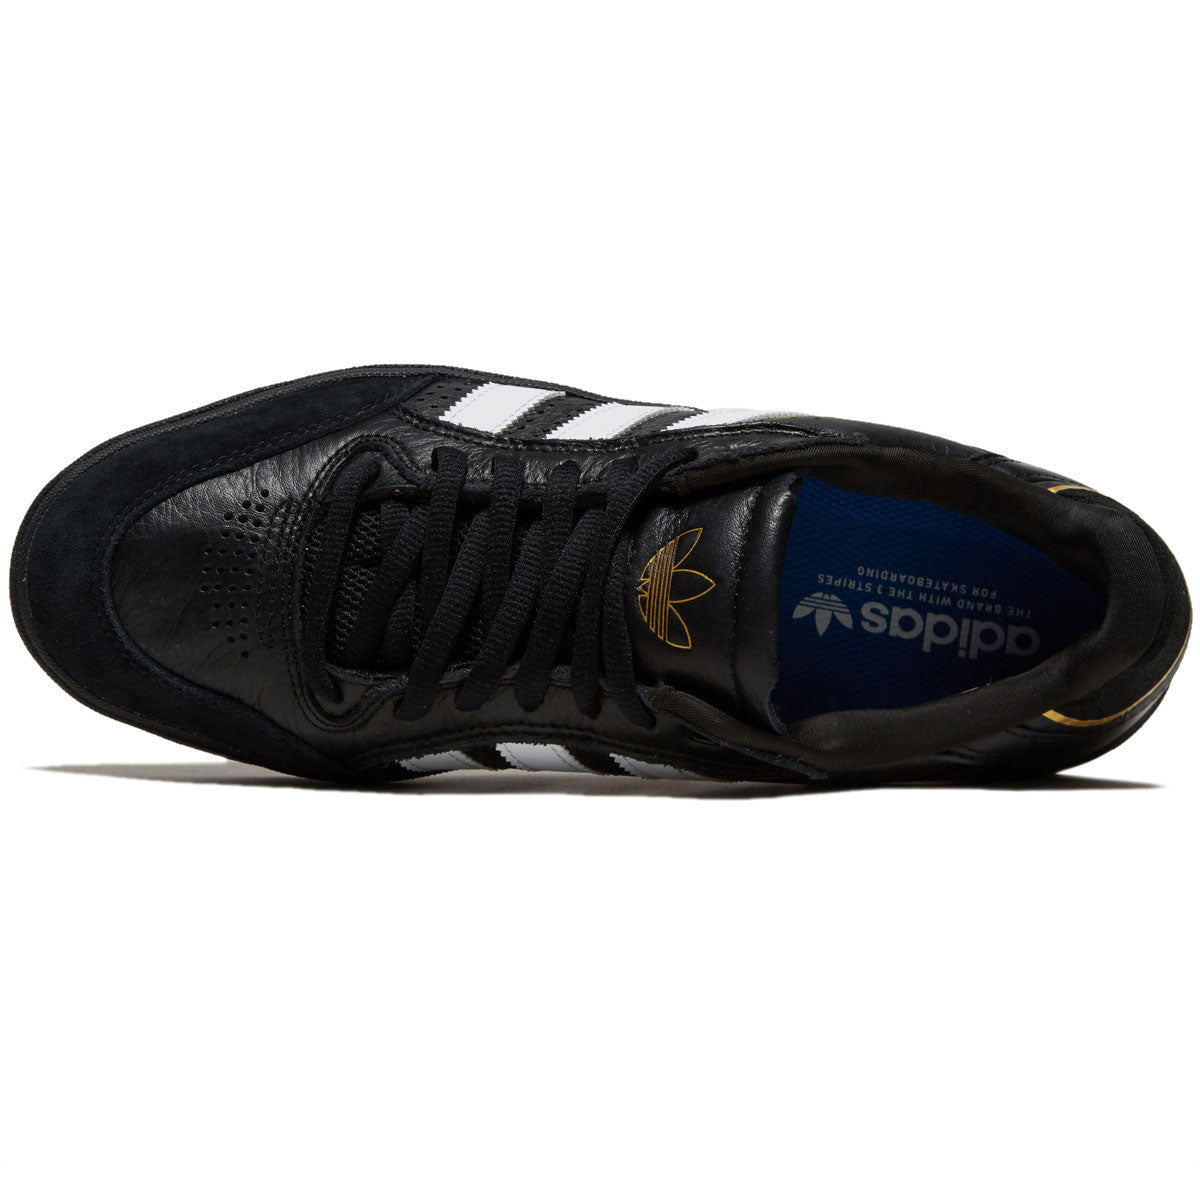 Adidas Tyshawn Low Shoes - New Black/White/Gold Metallic image 3